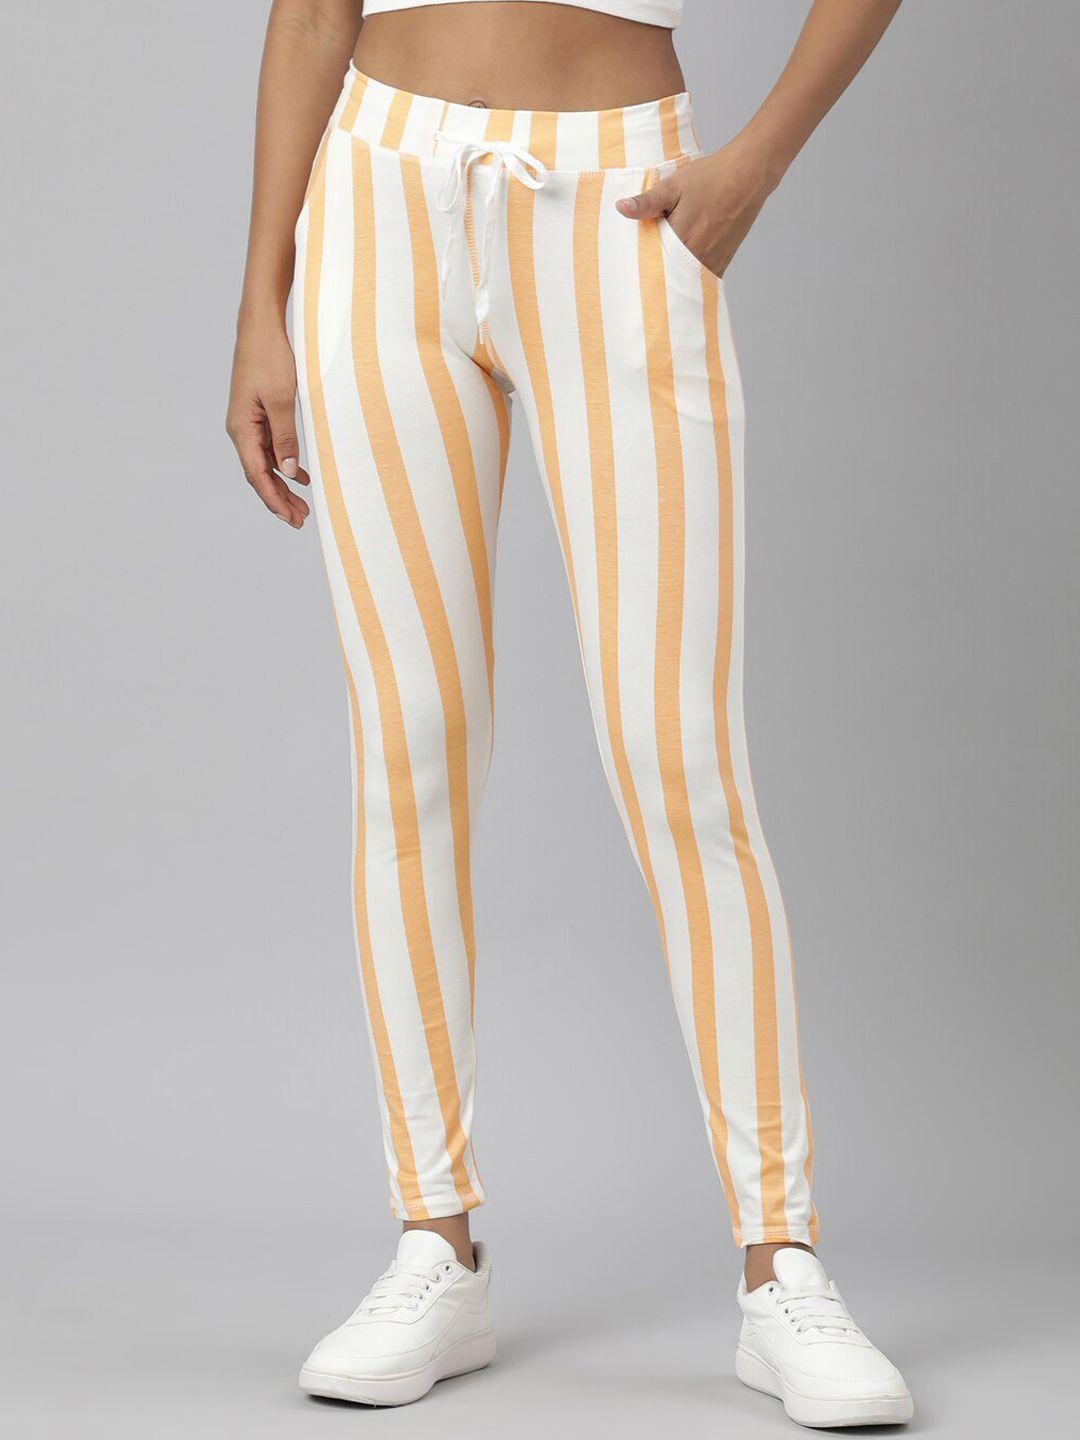 showoff-women-slim-fit-striped-track-pant